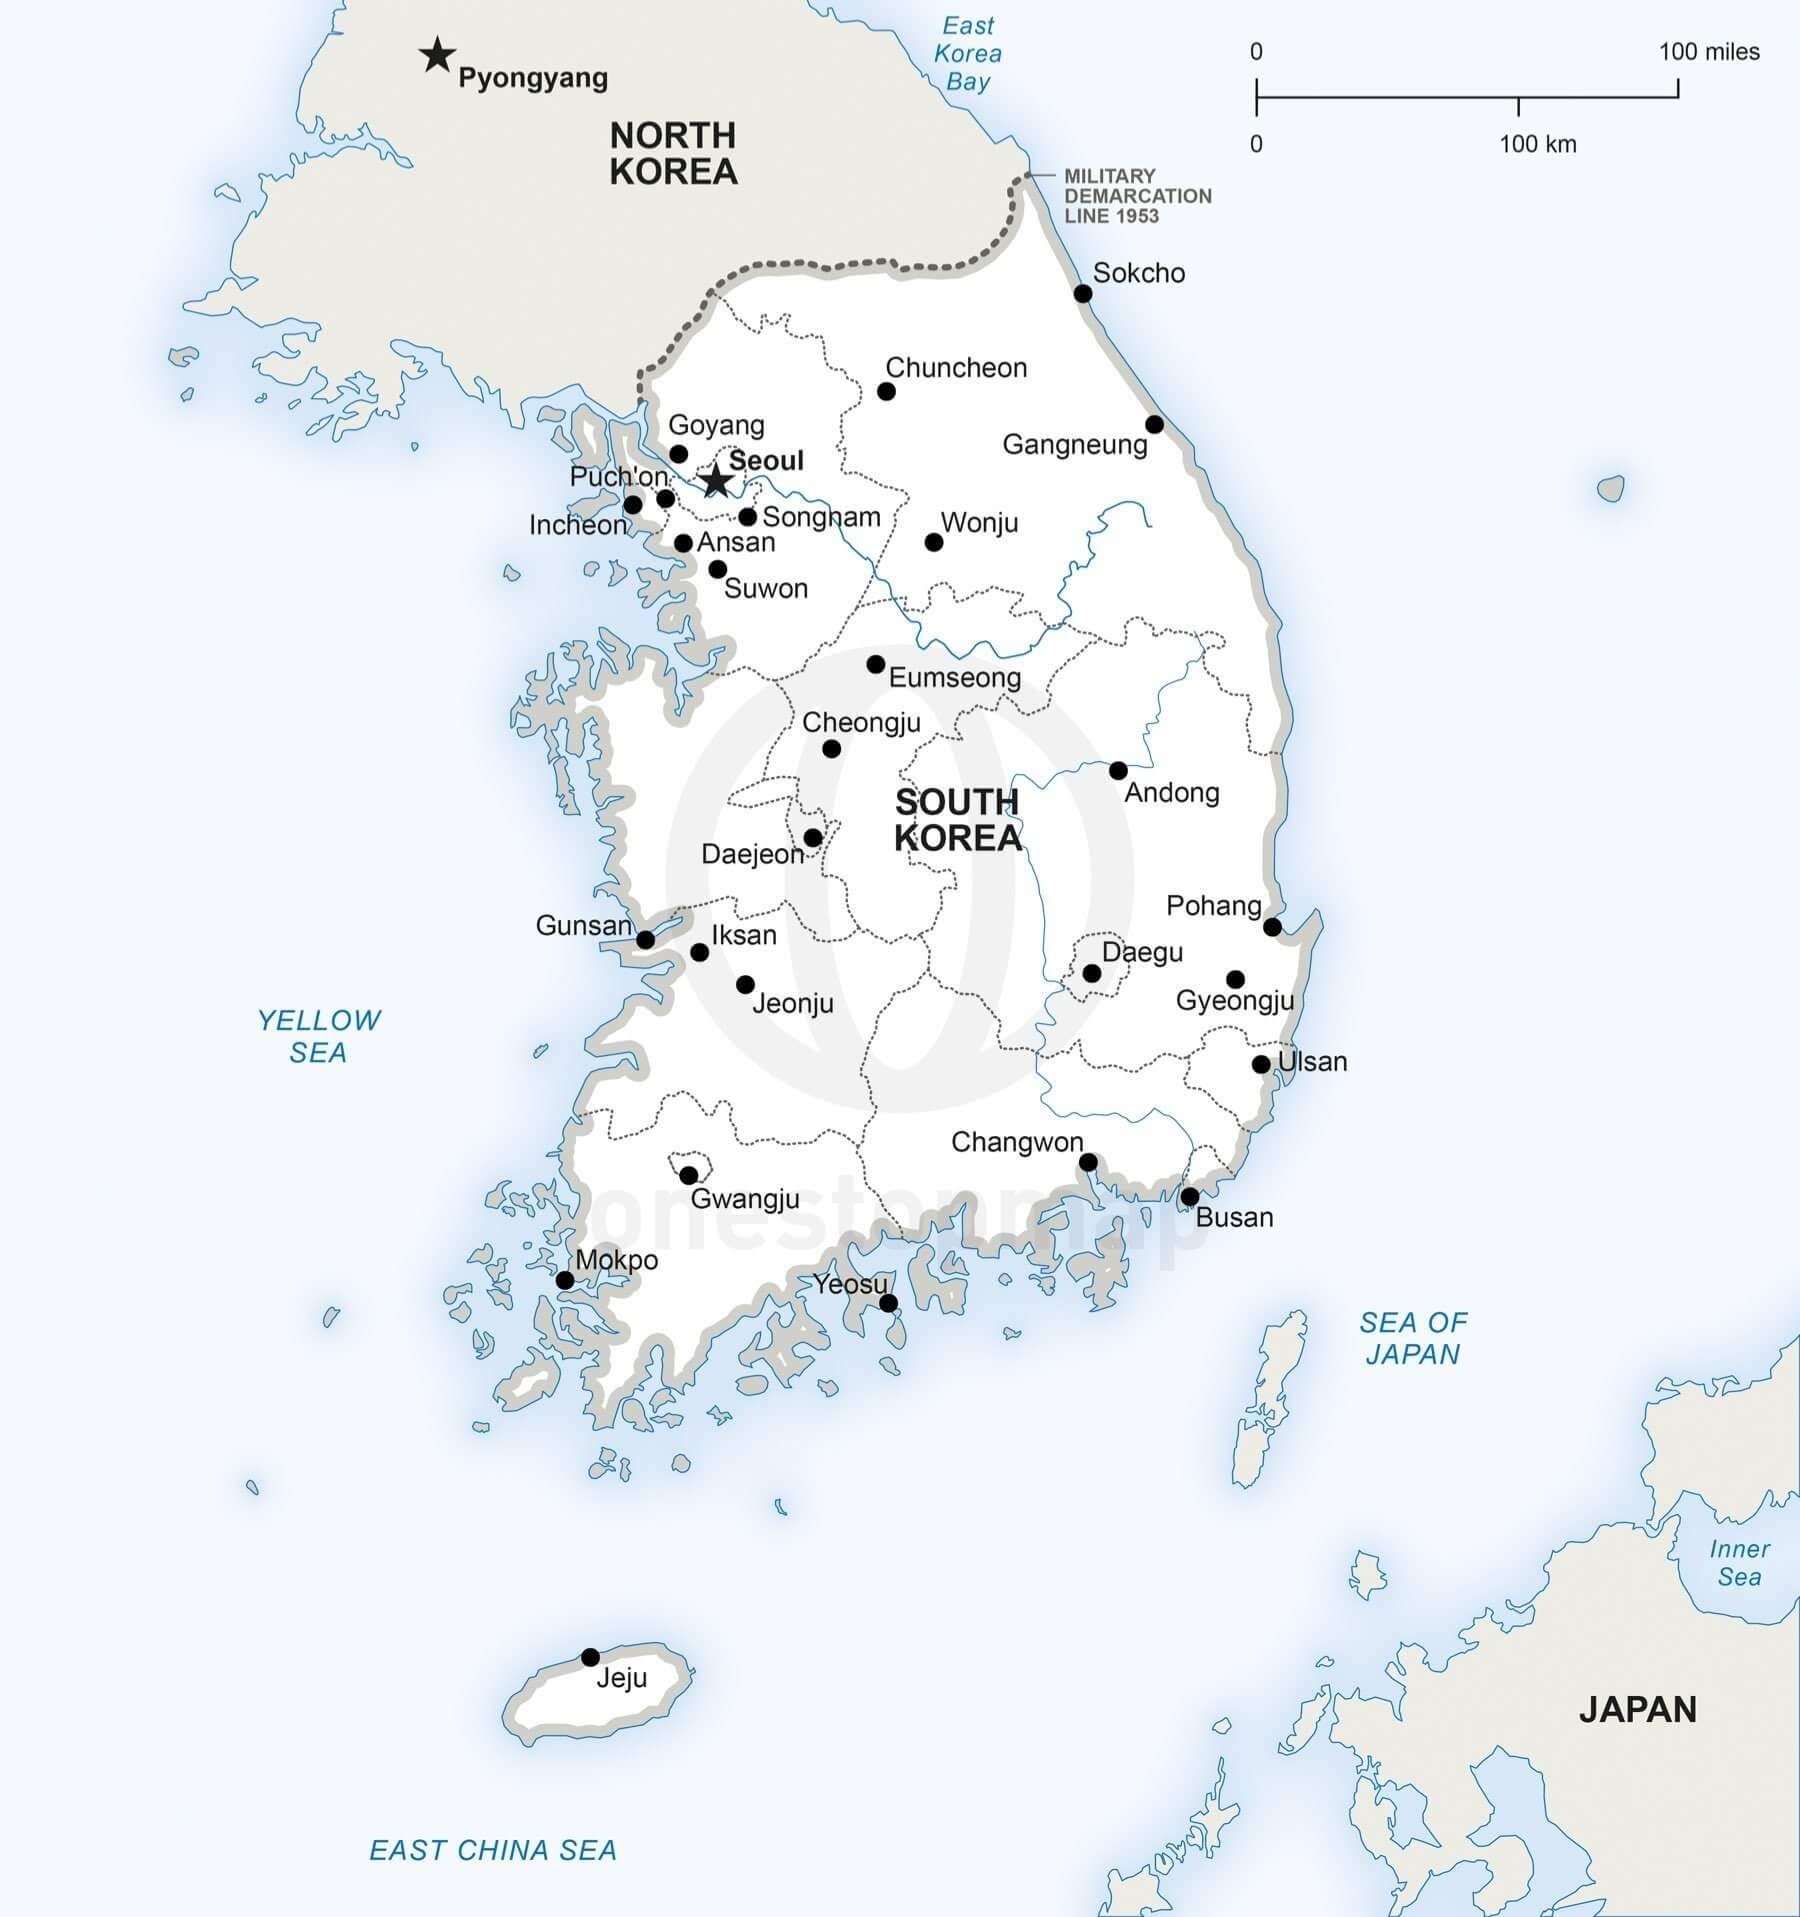 Map of South Korea political